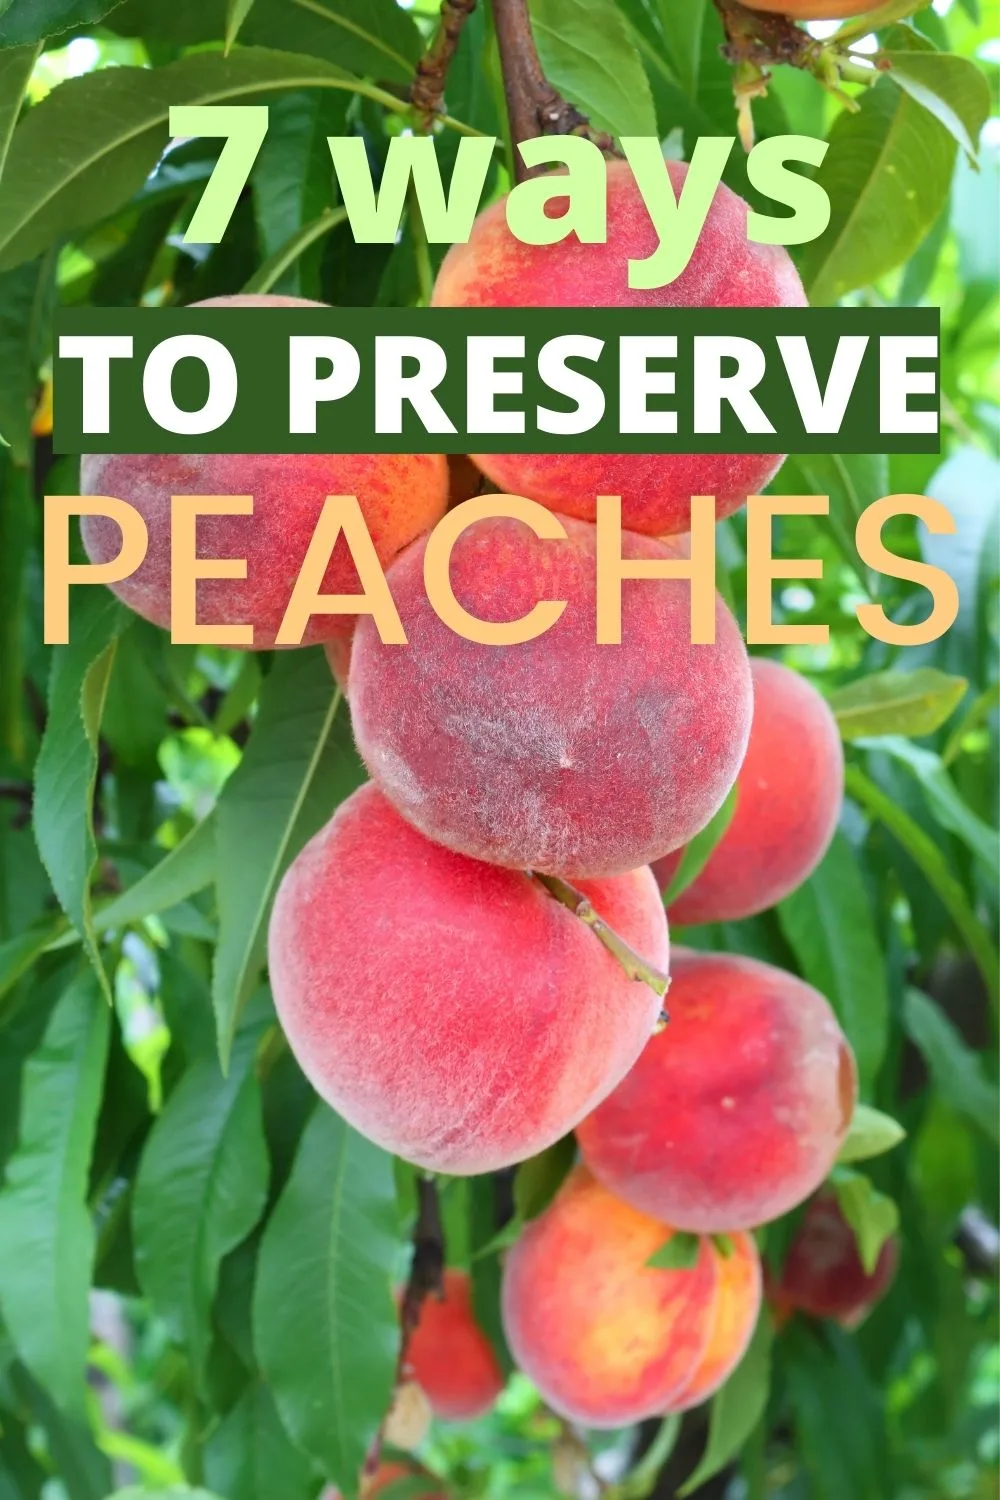 7 ways to preserve peaches